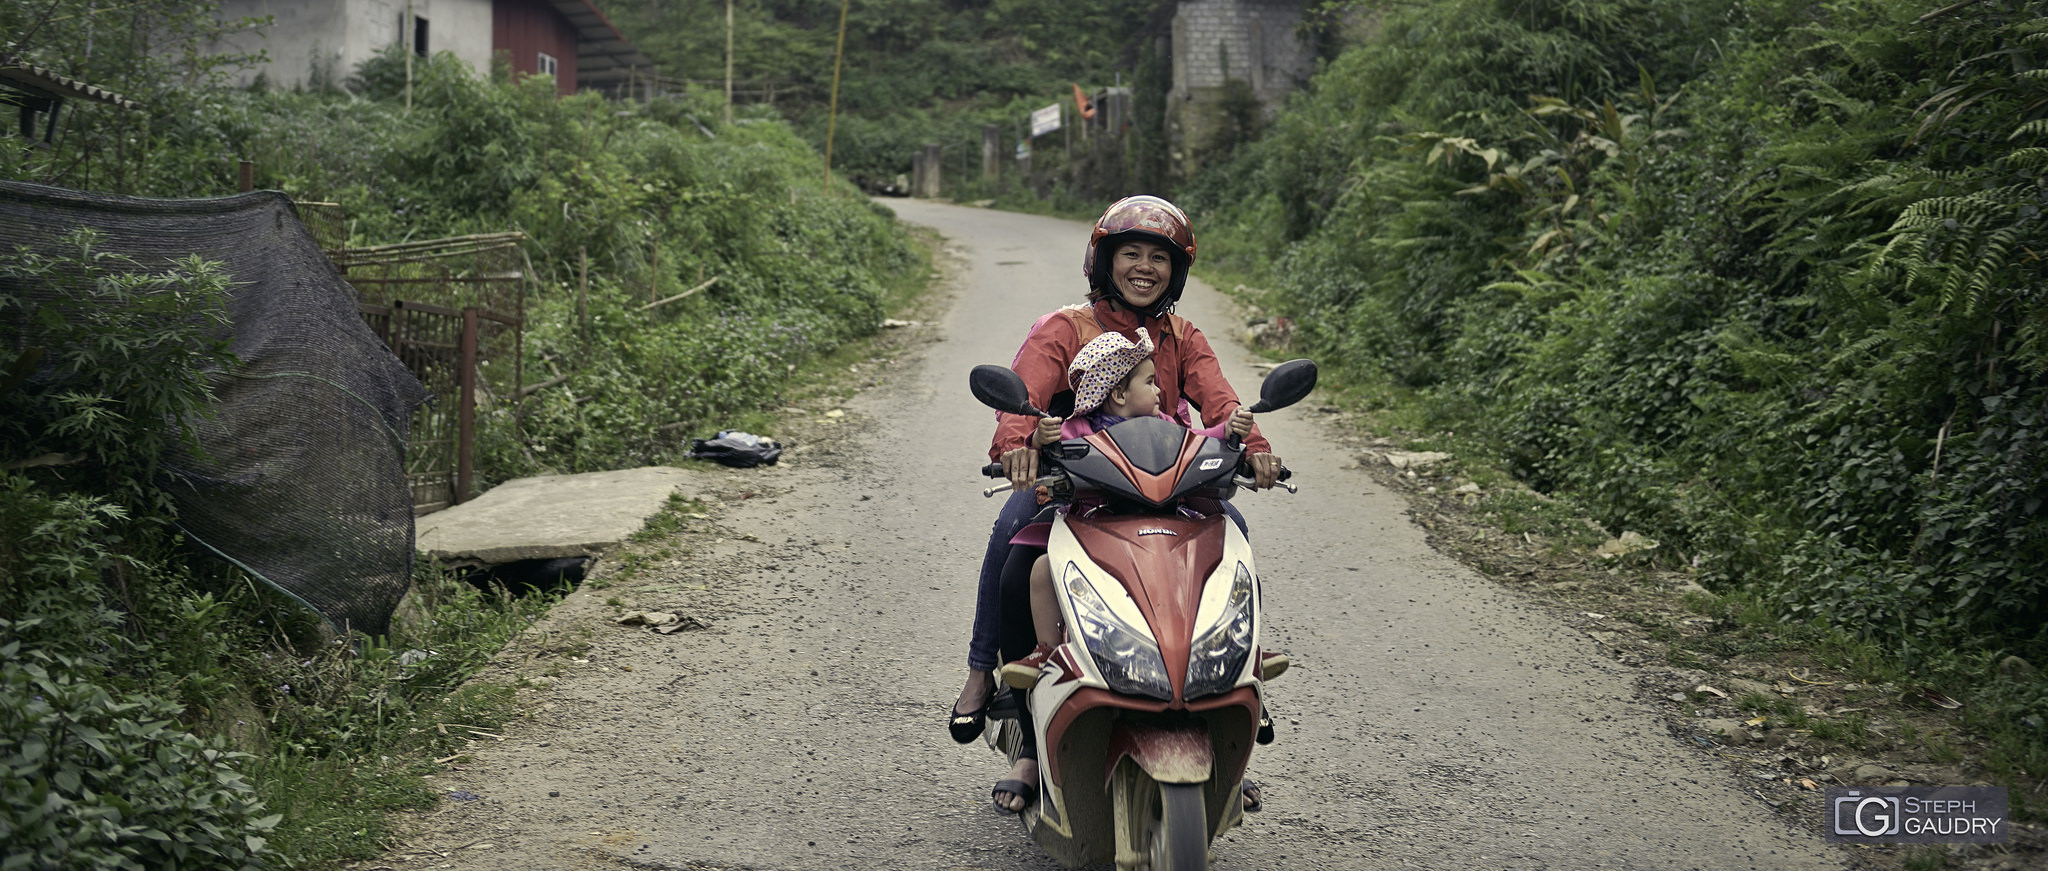 Vietnam - les joies du scooter [Click to start slideshow]